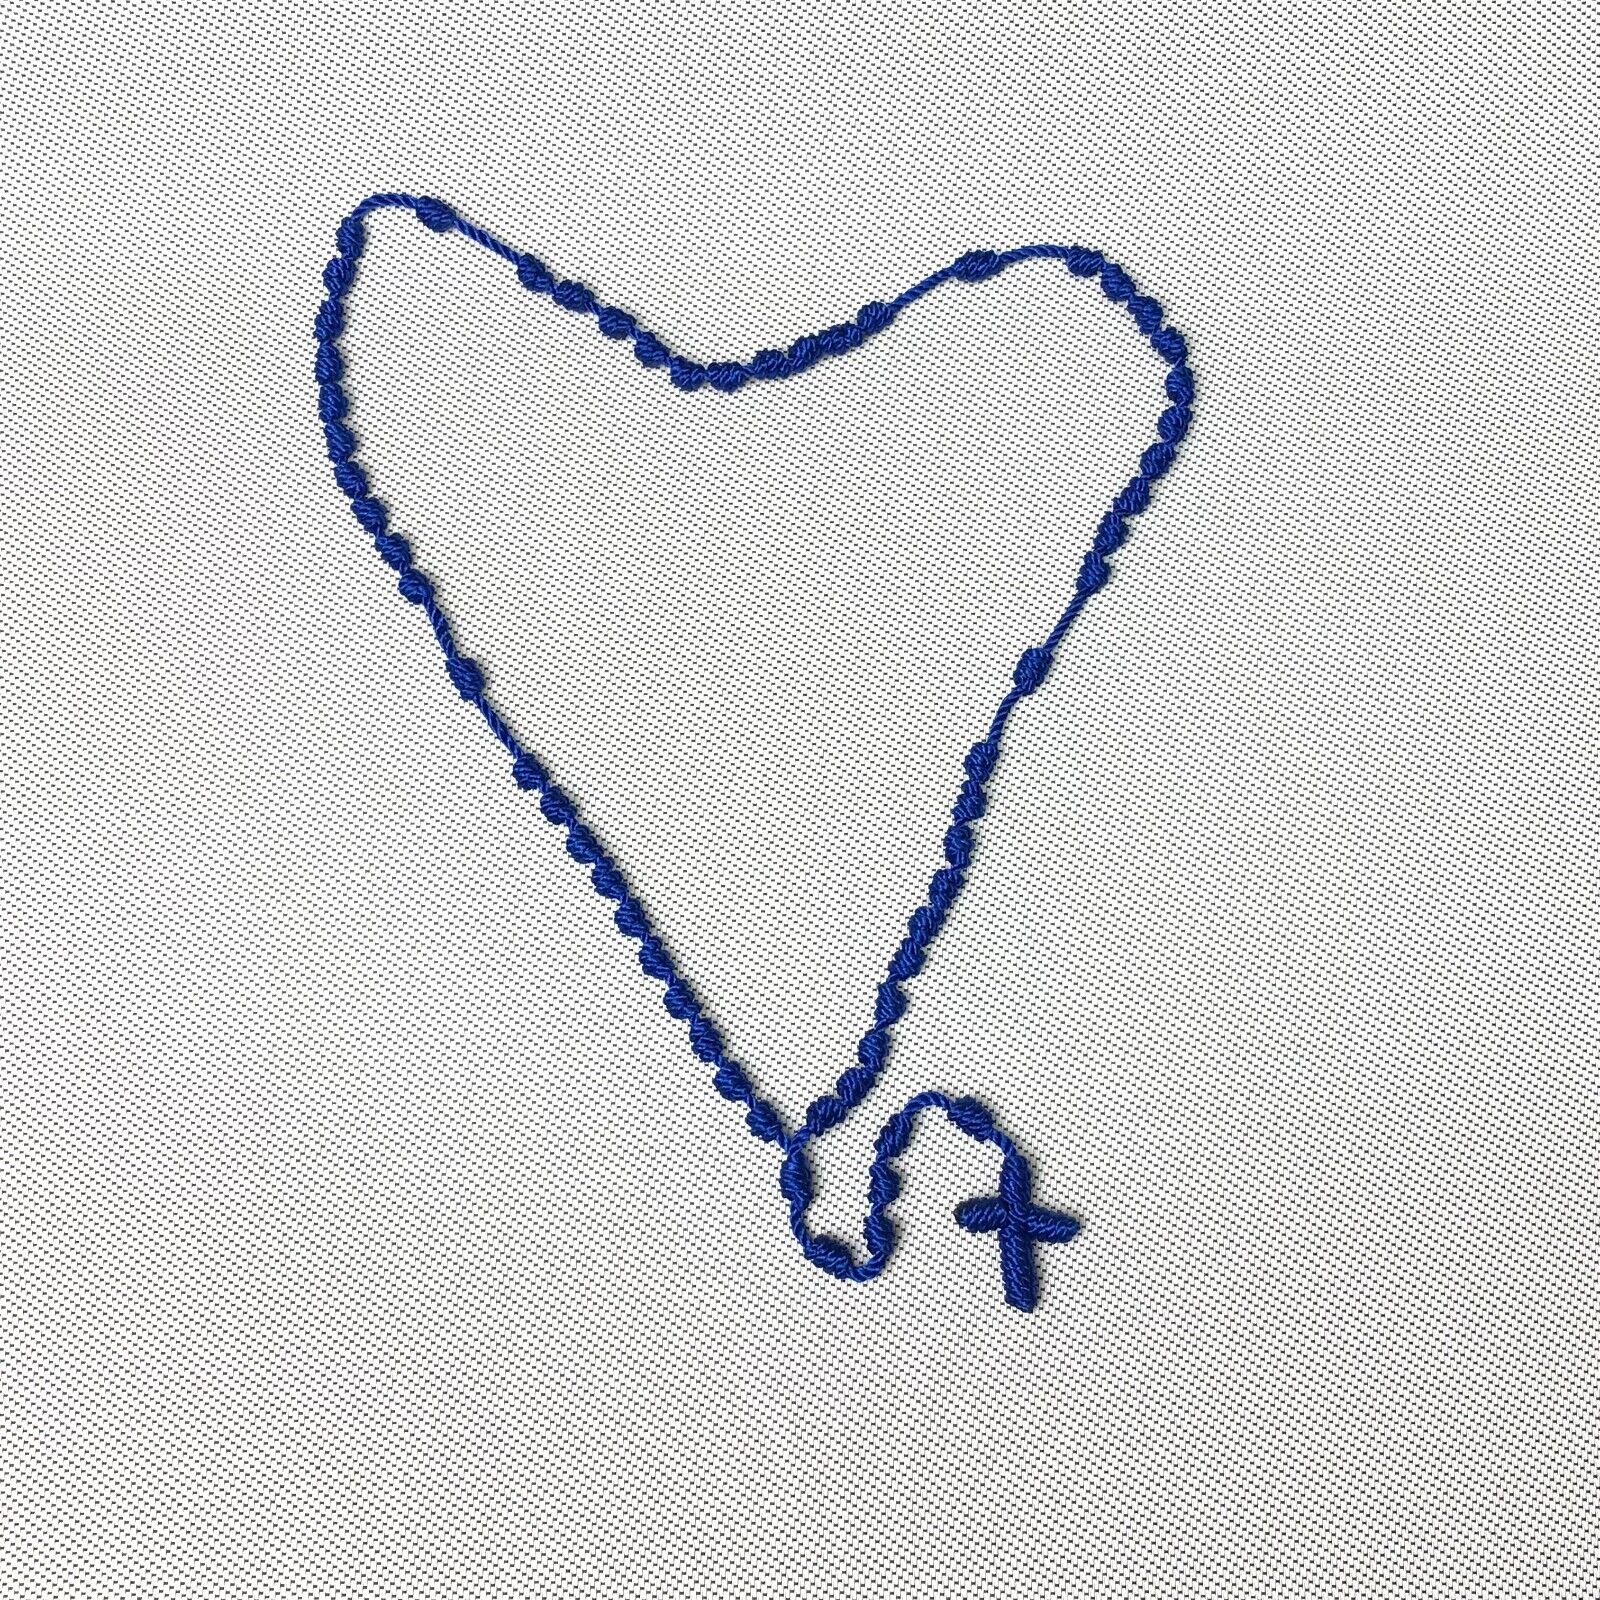 Rosario de Hilo Azul - Blue Knotted Cord Rosary